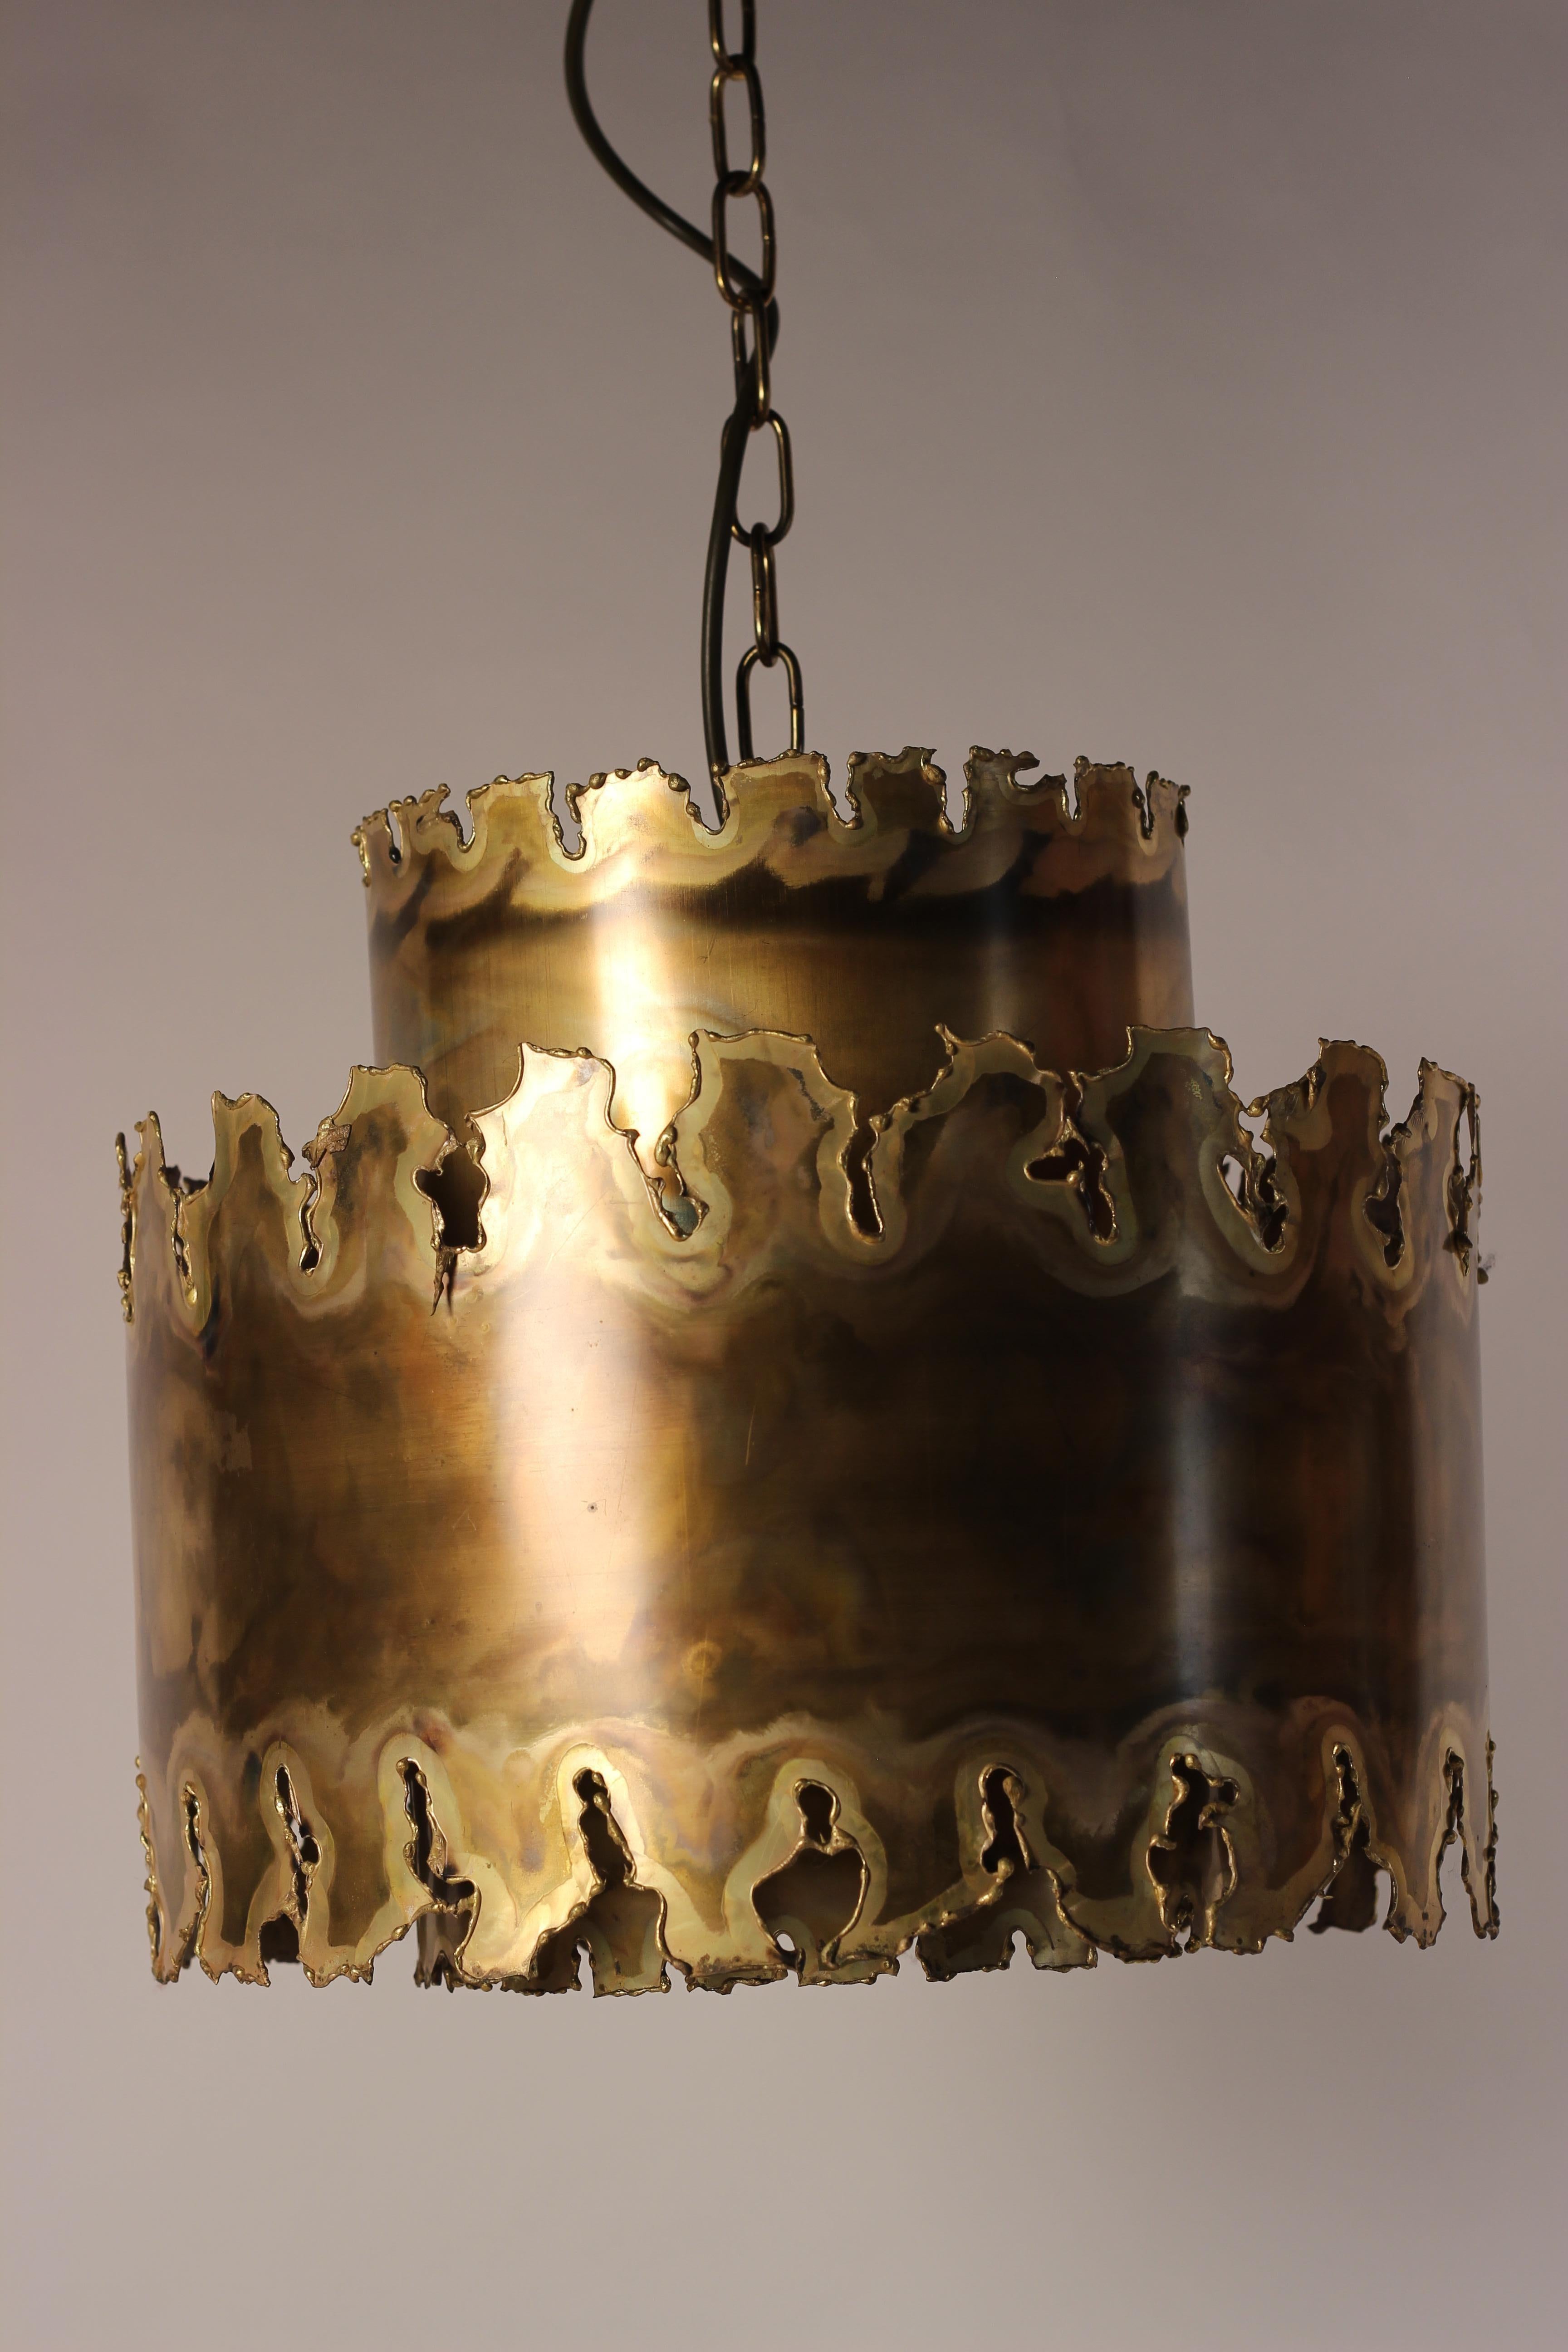 Hand-Crafted Mid-Century Modern Brutalist Pendant Light by Svend Aage Holm Sørensen, 1960’s For Sale